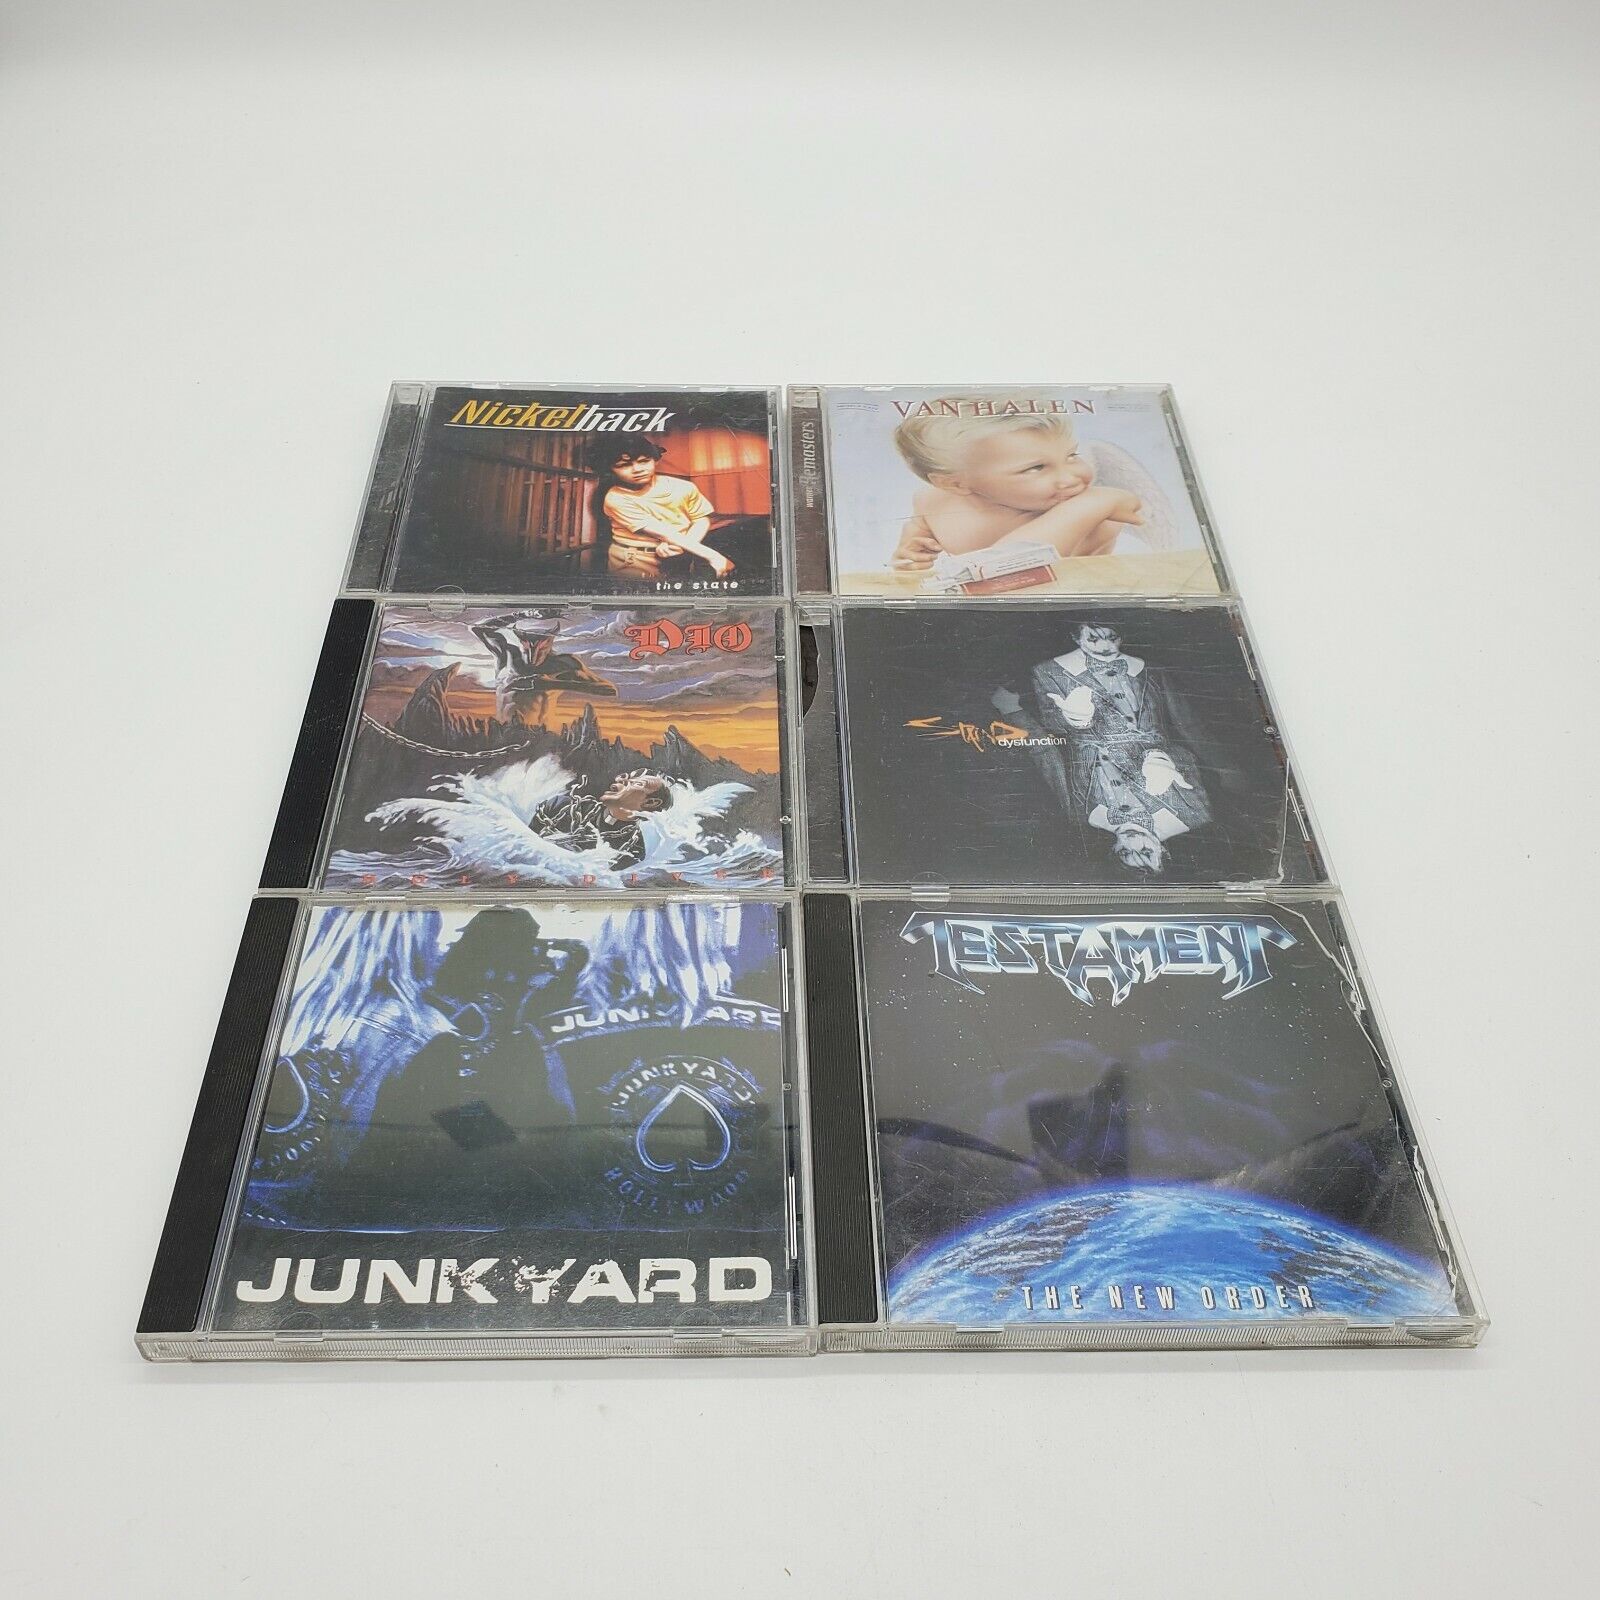 Rock CD Lot 0f 6 Nickelback Van Halen Testament Dio Junkyard Staind Dysfunction